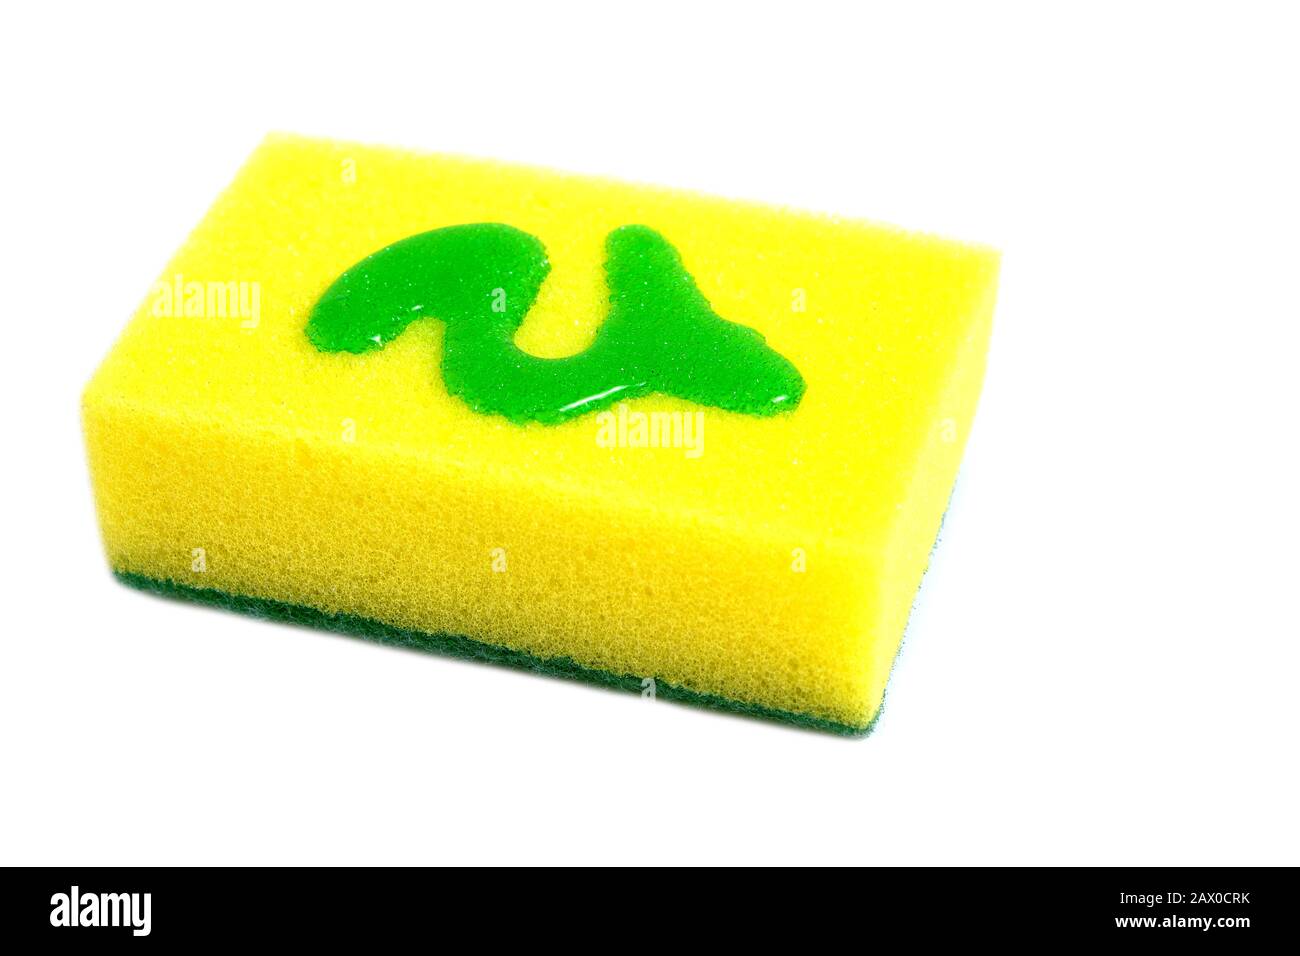 Yellow foam sponge with green dishwashing liquid on a white background  Stock Photo - Alamy